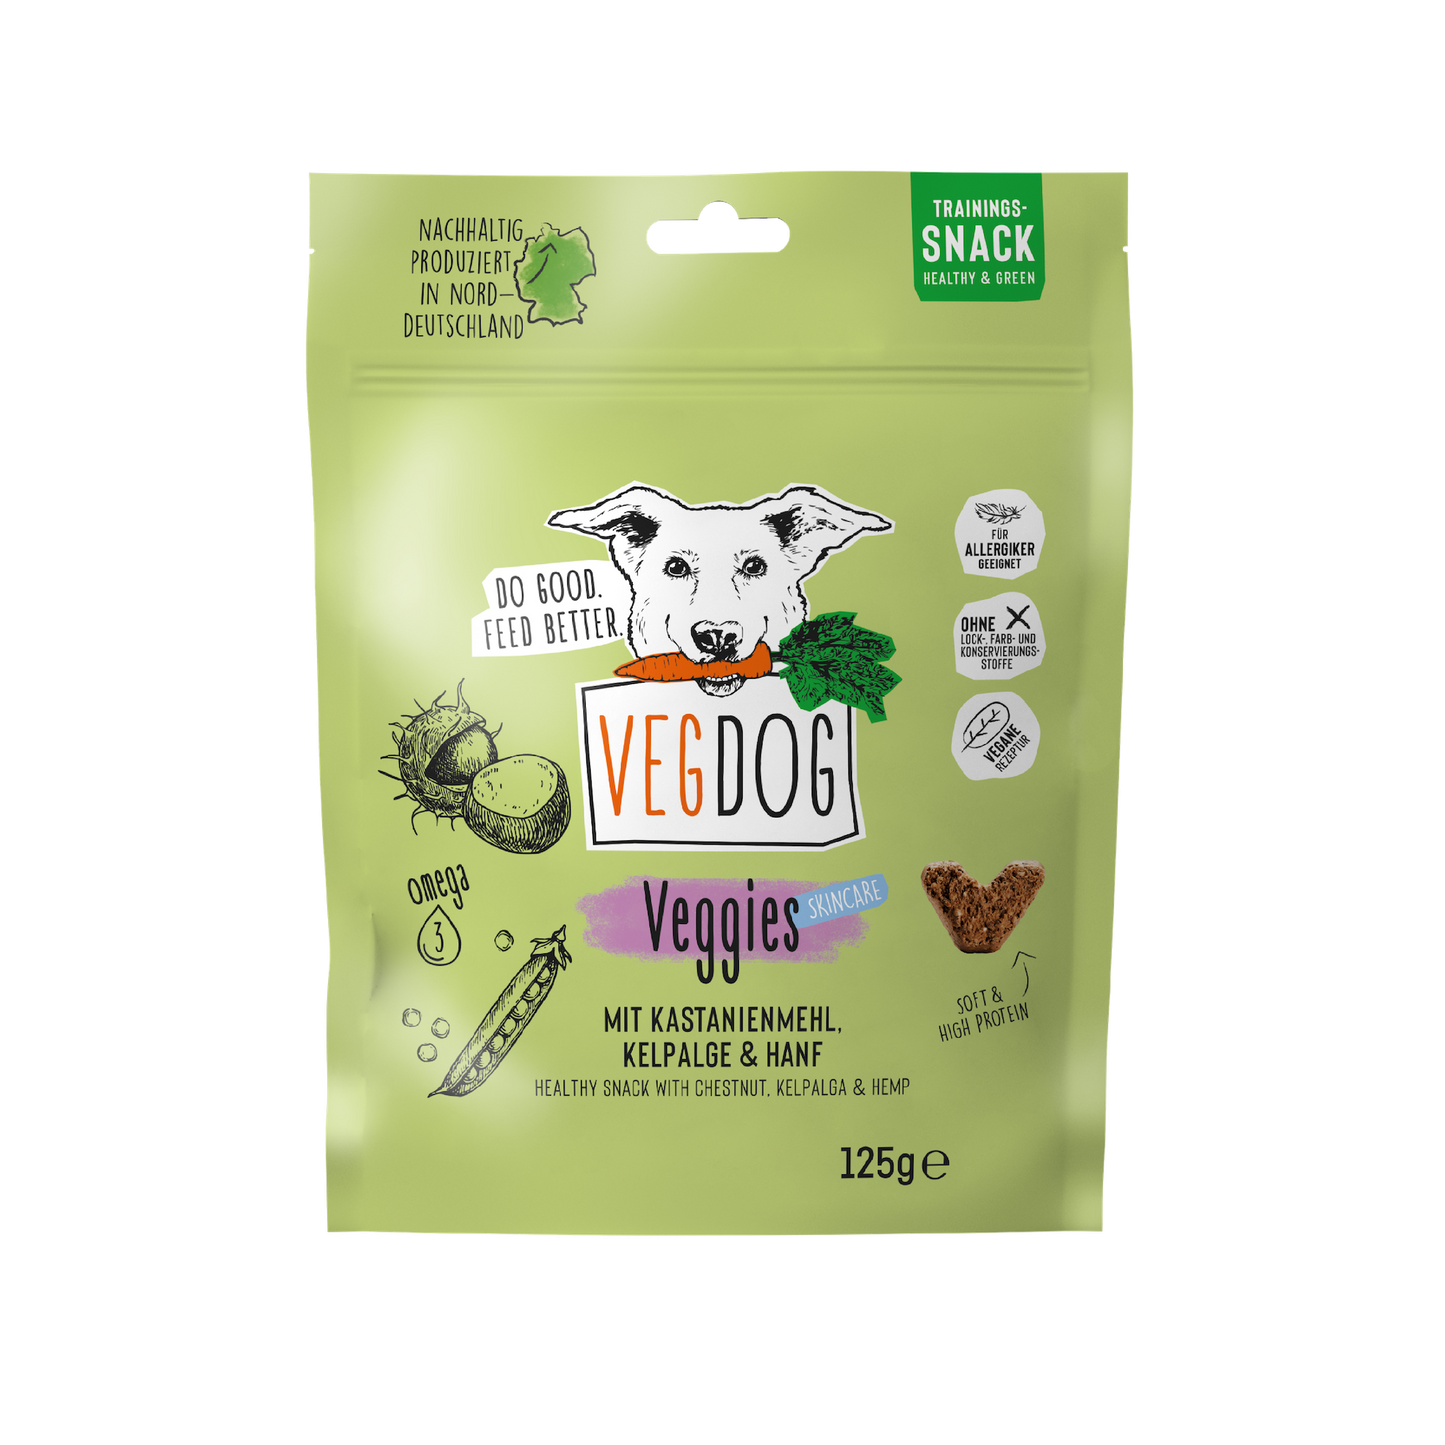 VEGDOG Hundetrainingssnack "VEGGIES skincare" mit Favabohne, Sanddorn & Kurkuma - 125g | vegan